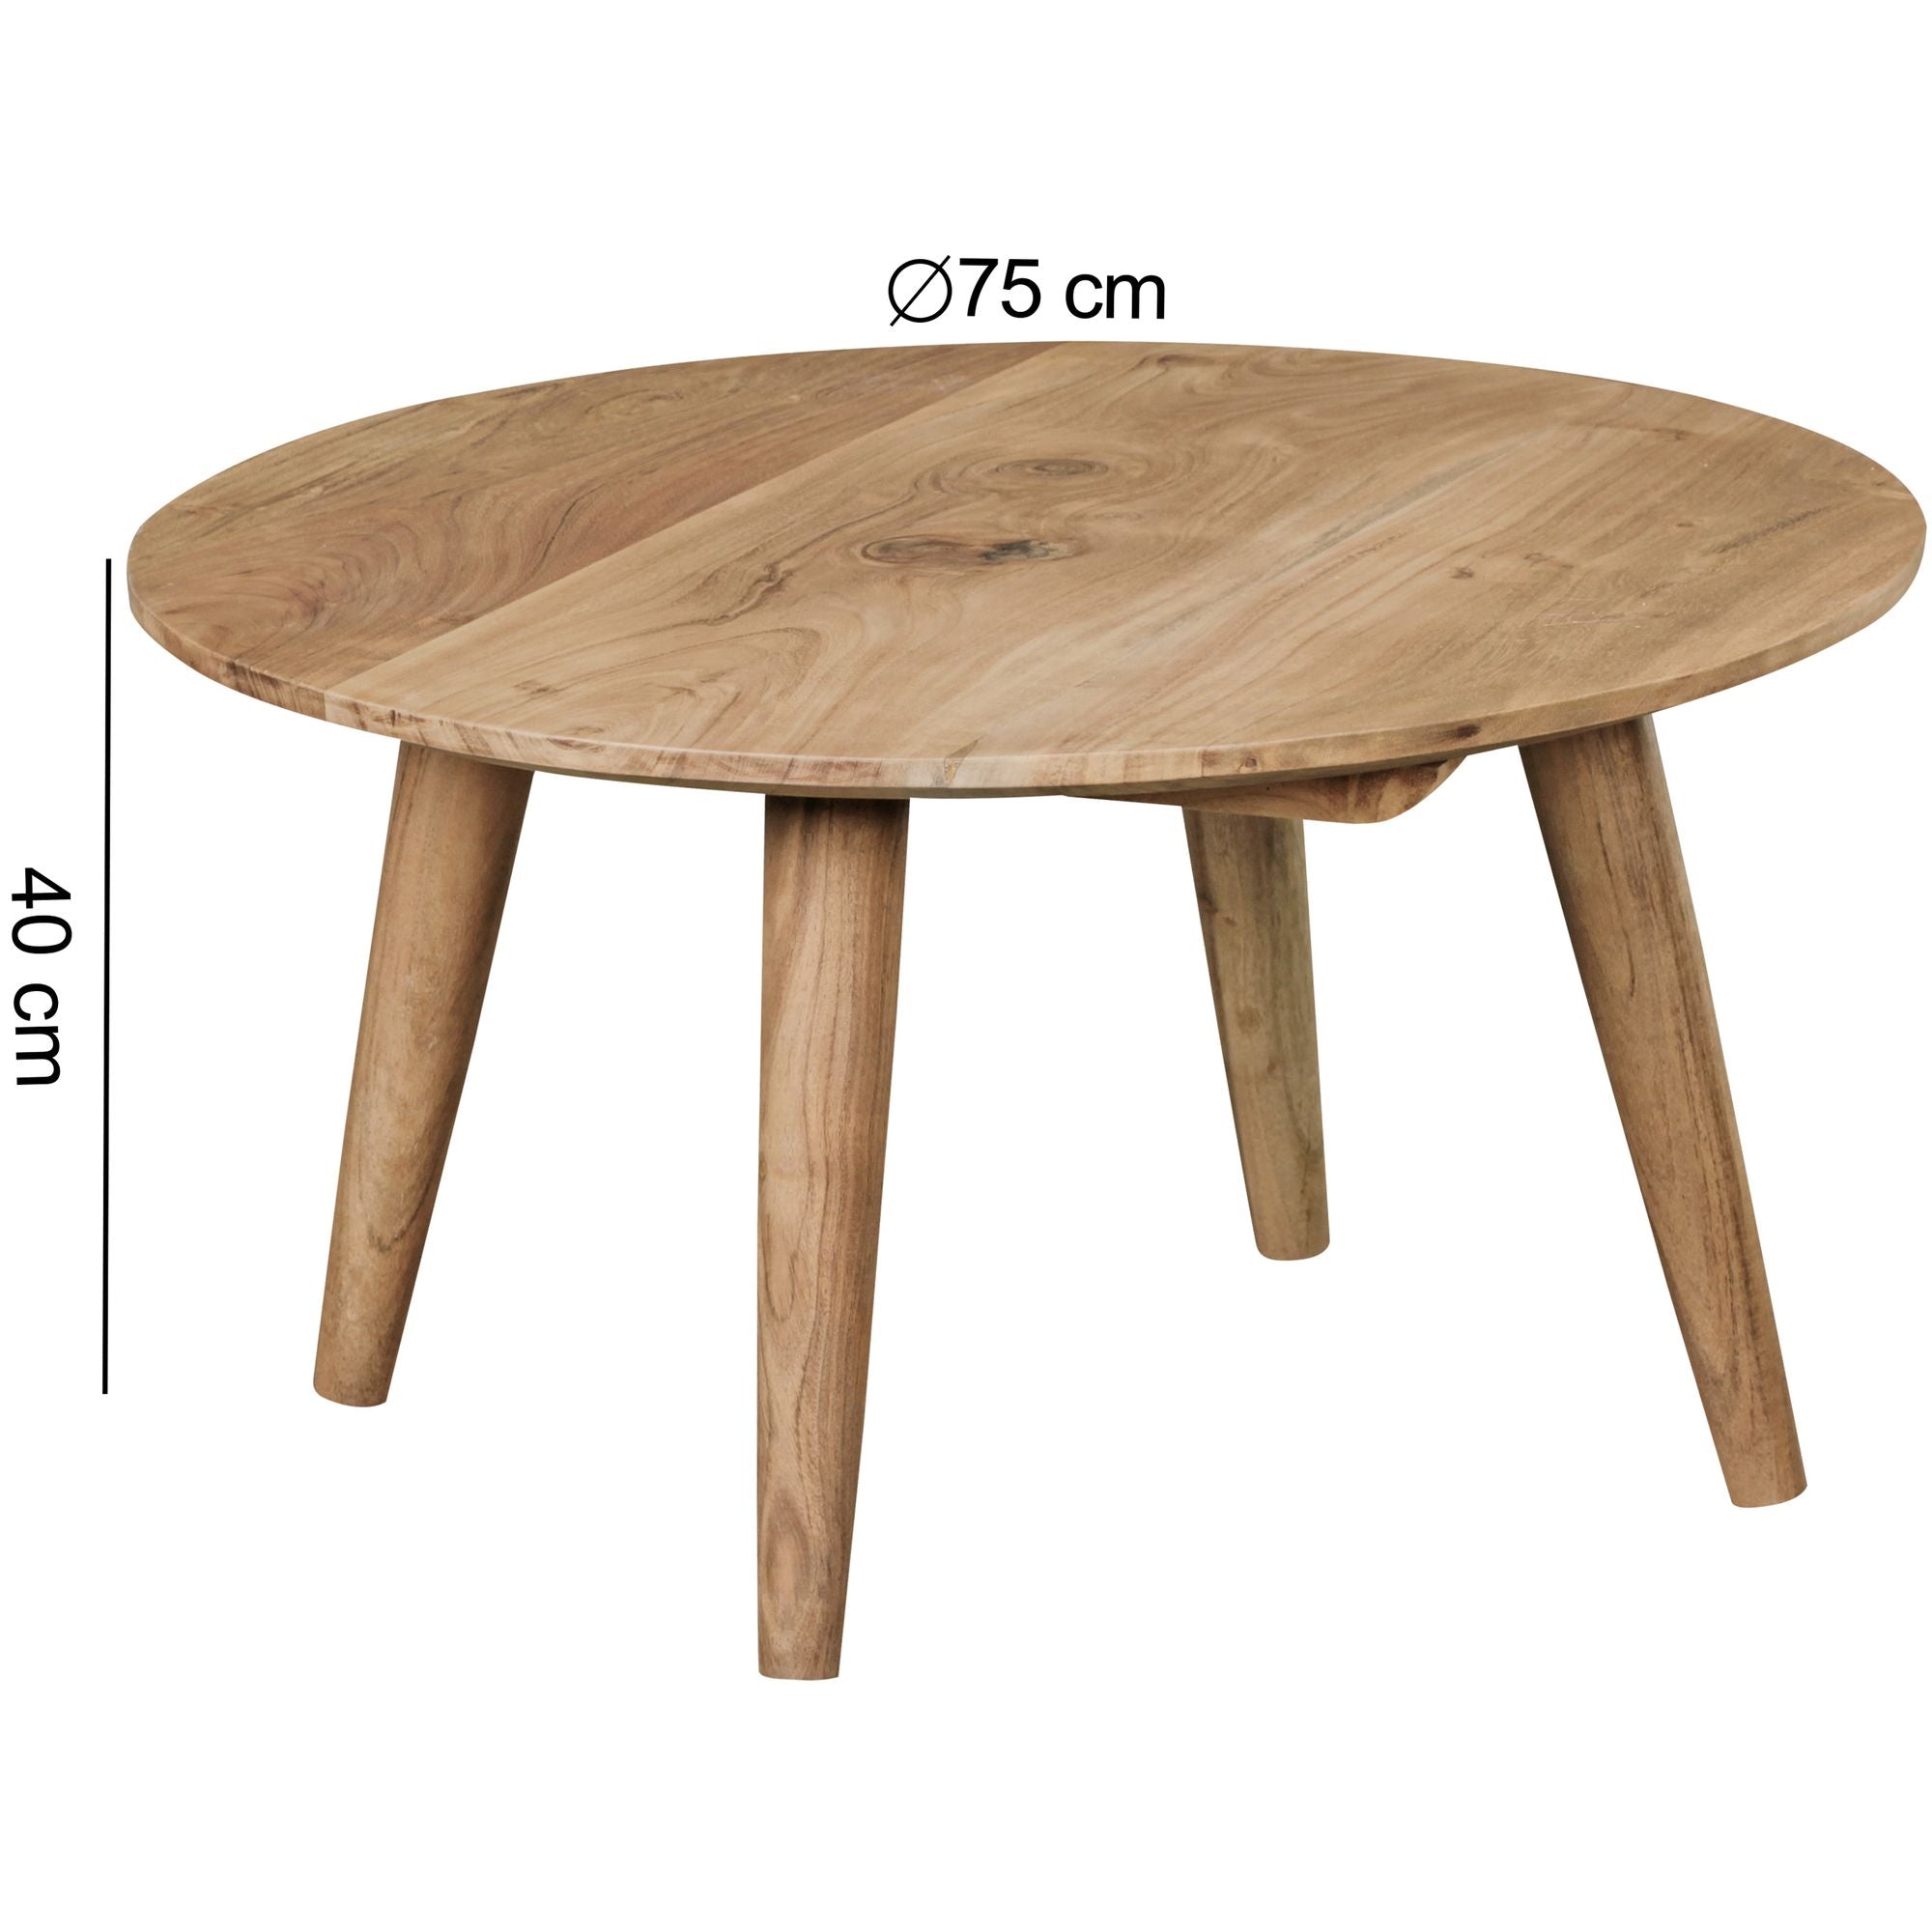 Table basse Fulshear de Nancy - Table basse - Bois massif - Bois d'acacia - Table ronde - 75 x 75 x 40 cm